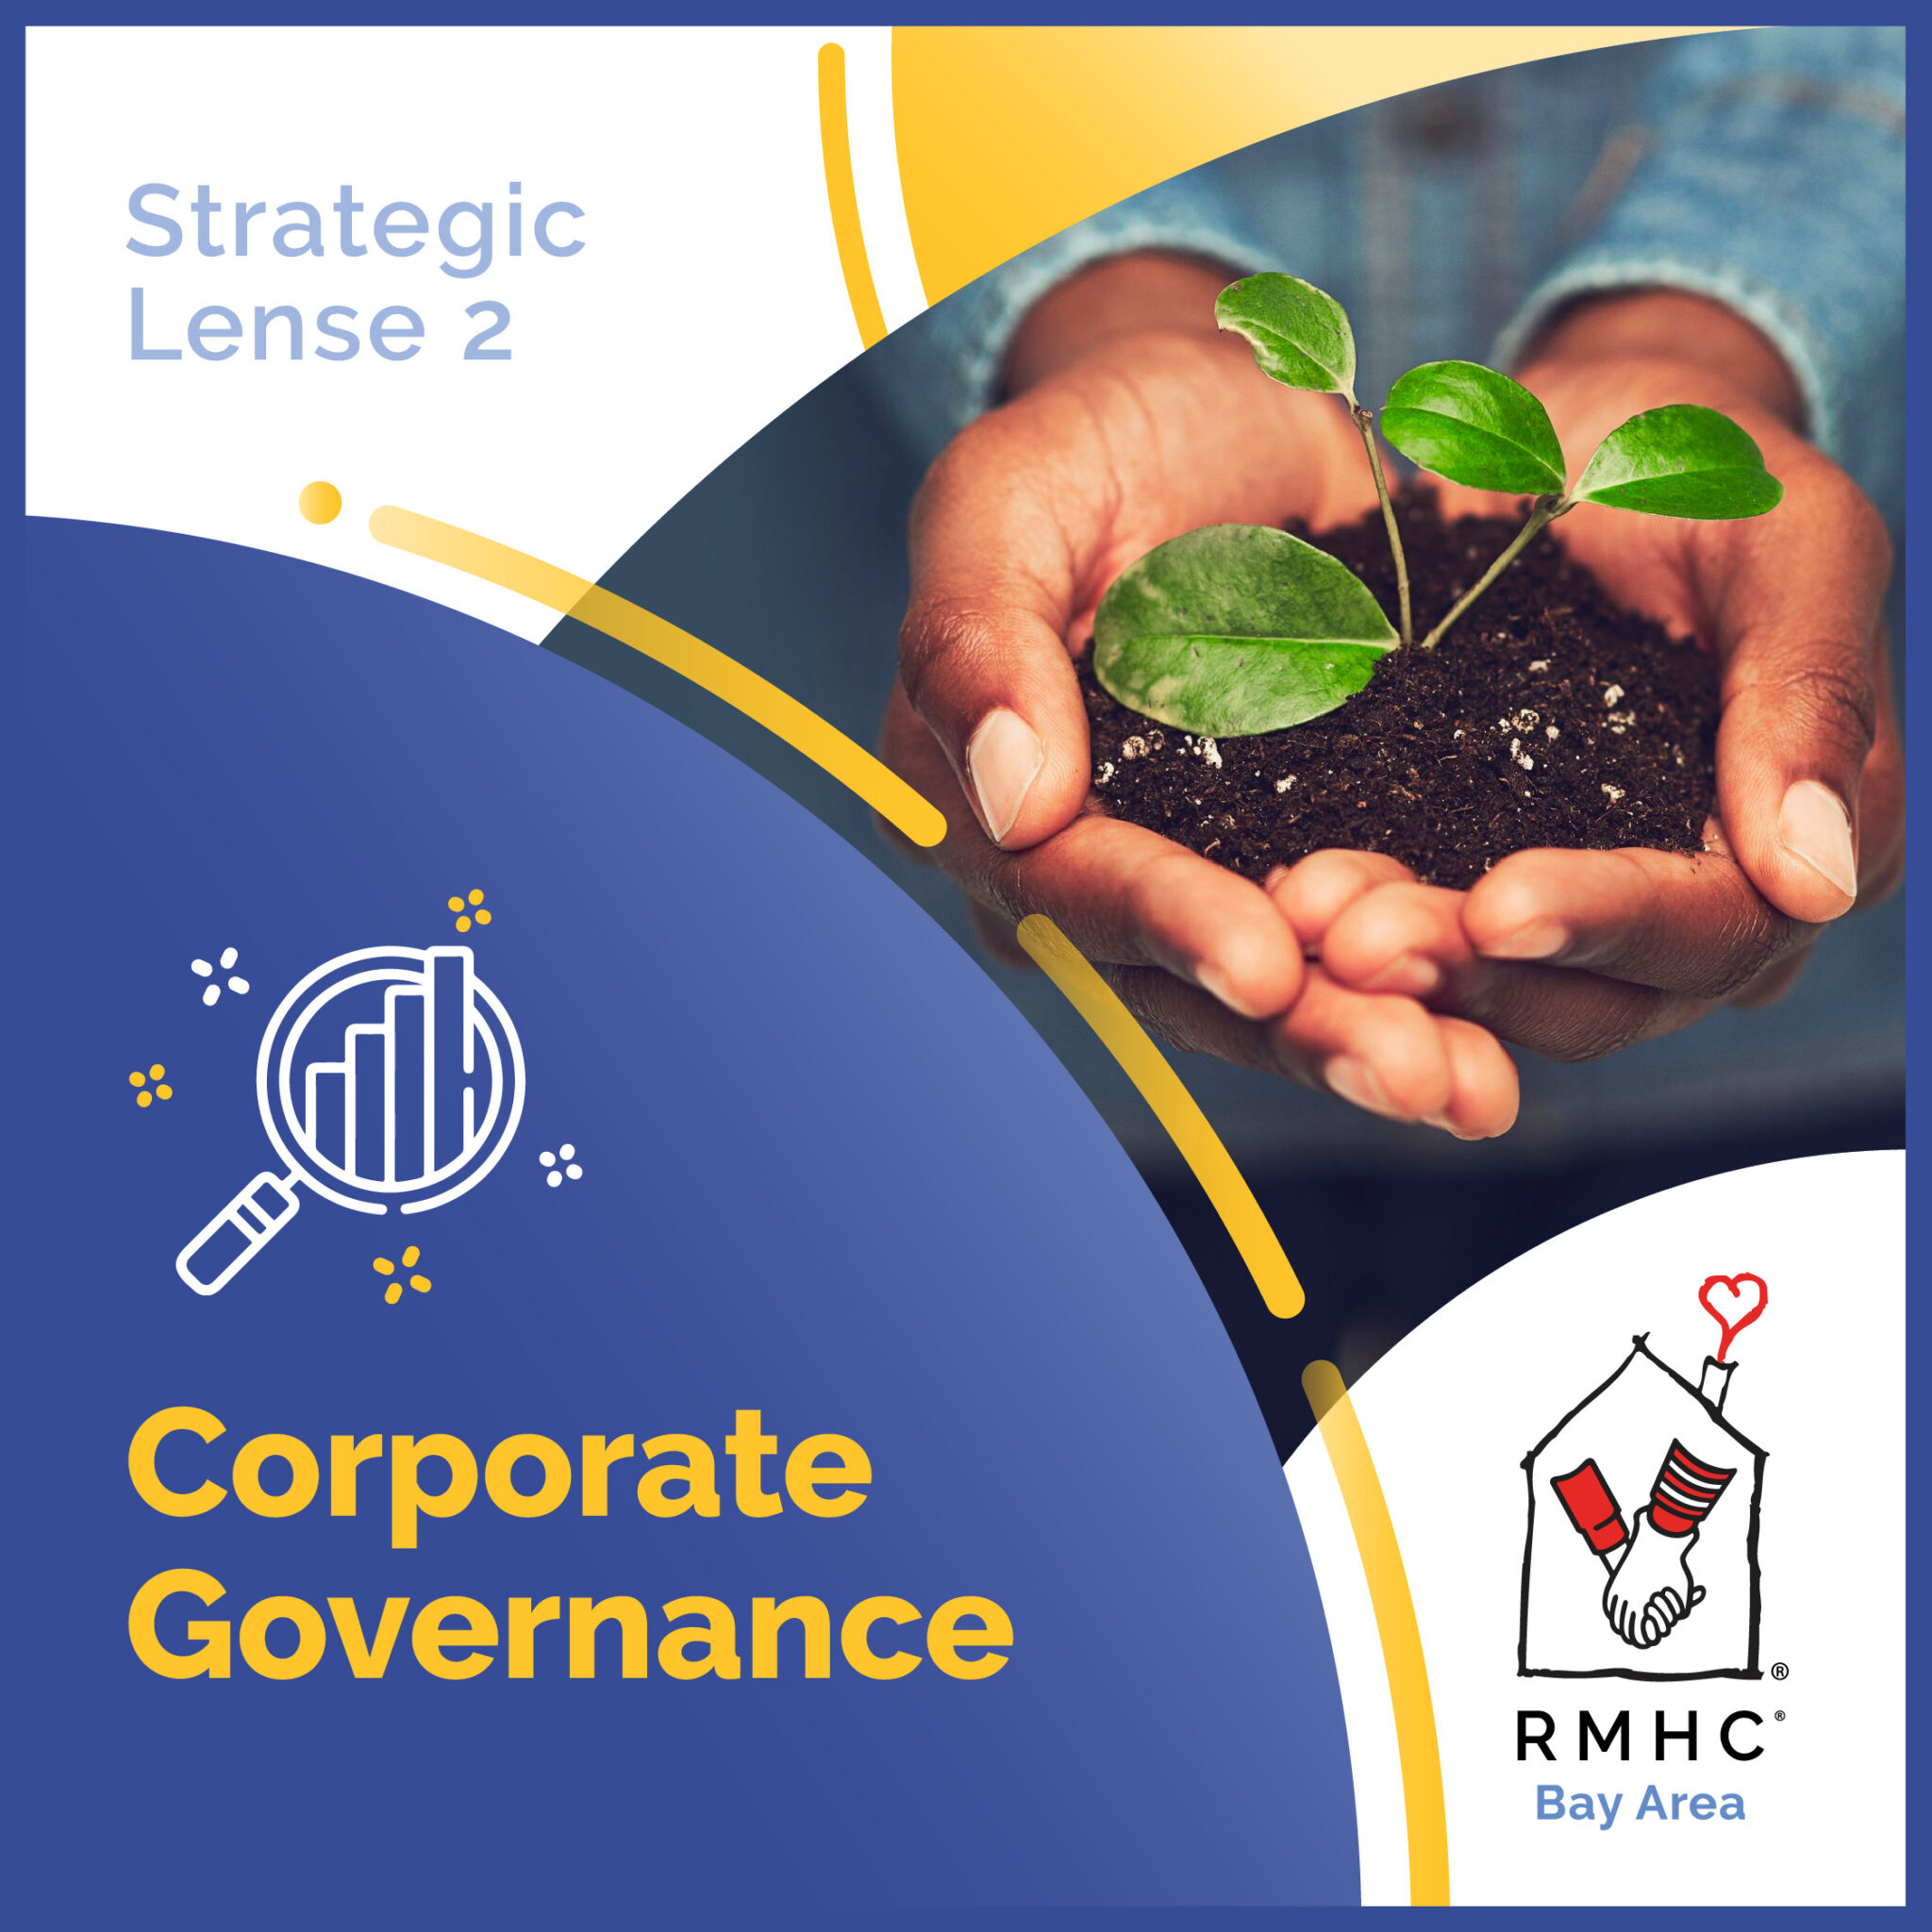 Strategic Lens 2 - Corporate Governance